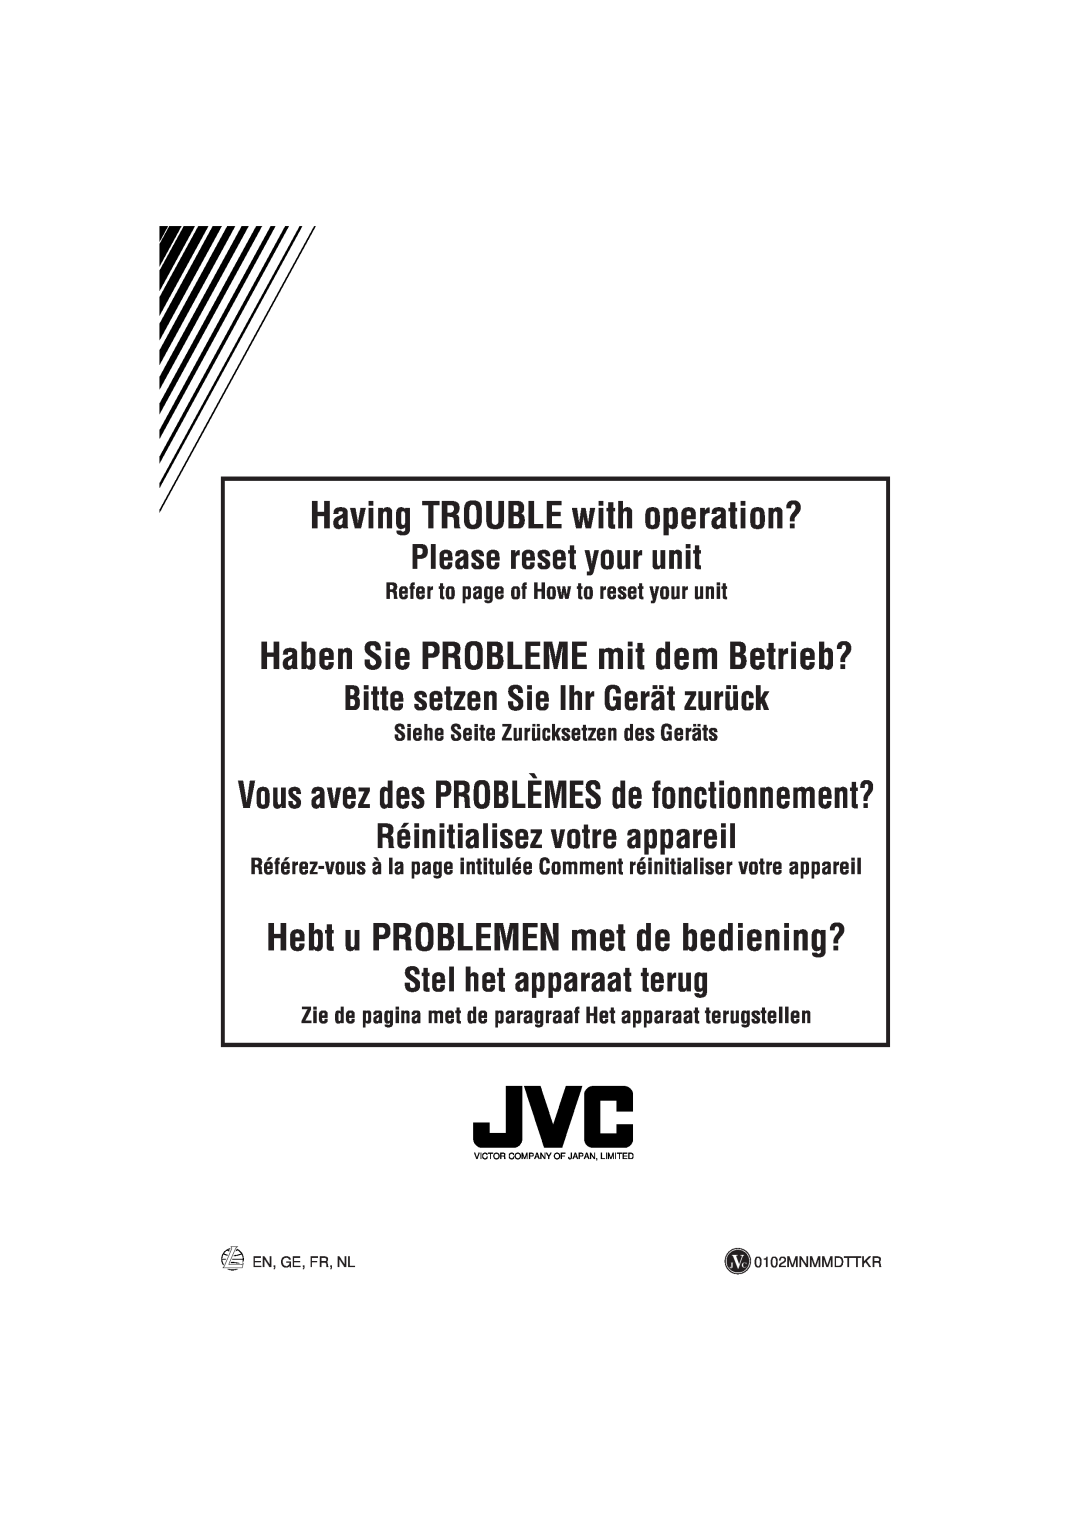 JVC PIM171200 manual Haben Sie PROBLEME mit dem Betrieb?, Hebt u PROBLEMEN met de bediening?, Please reset your unit 